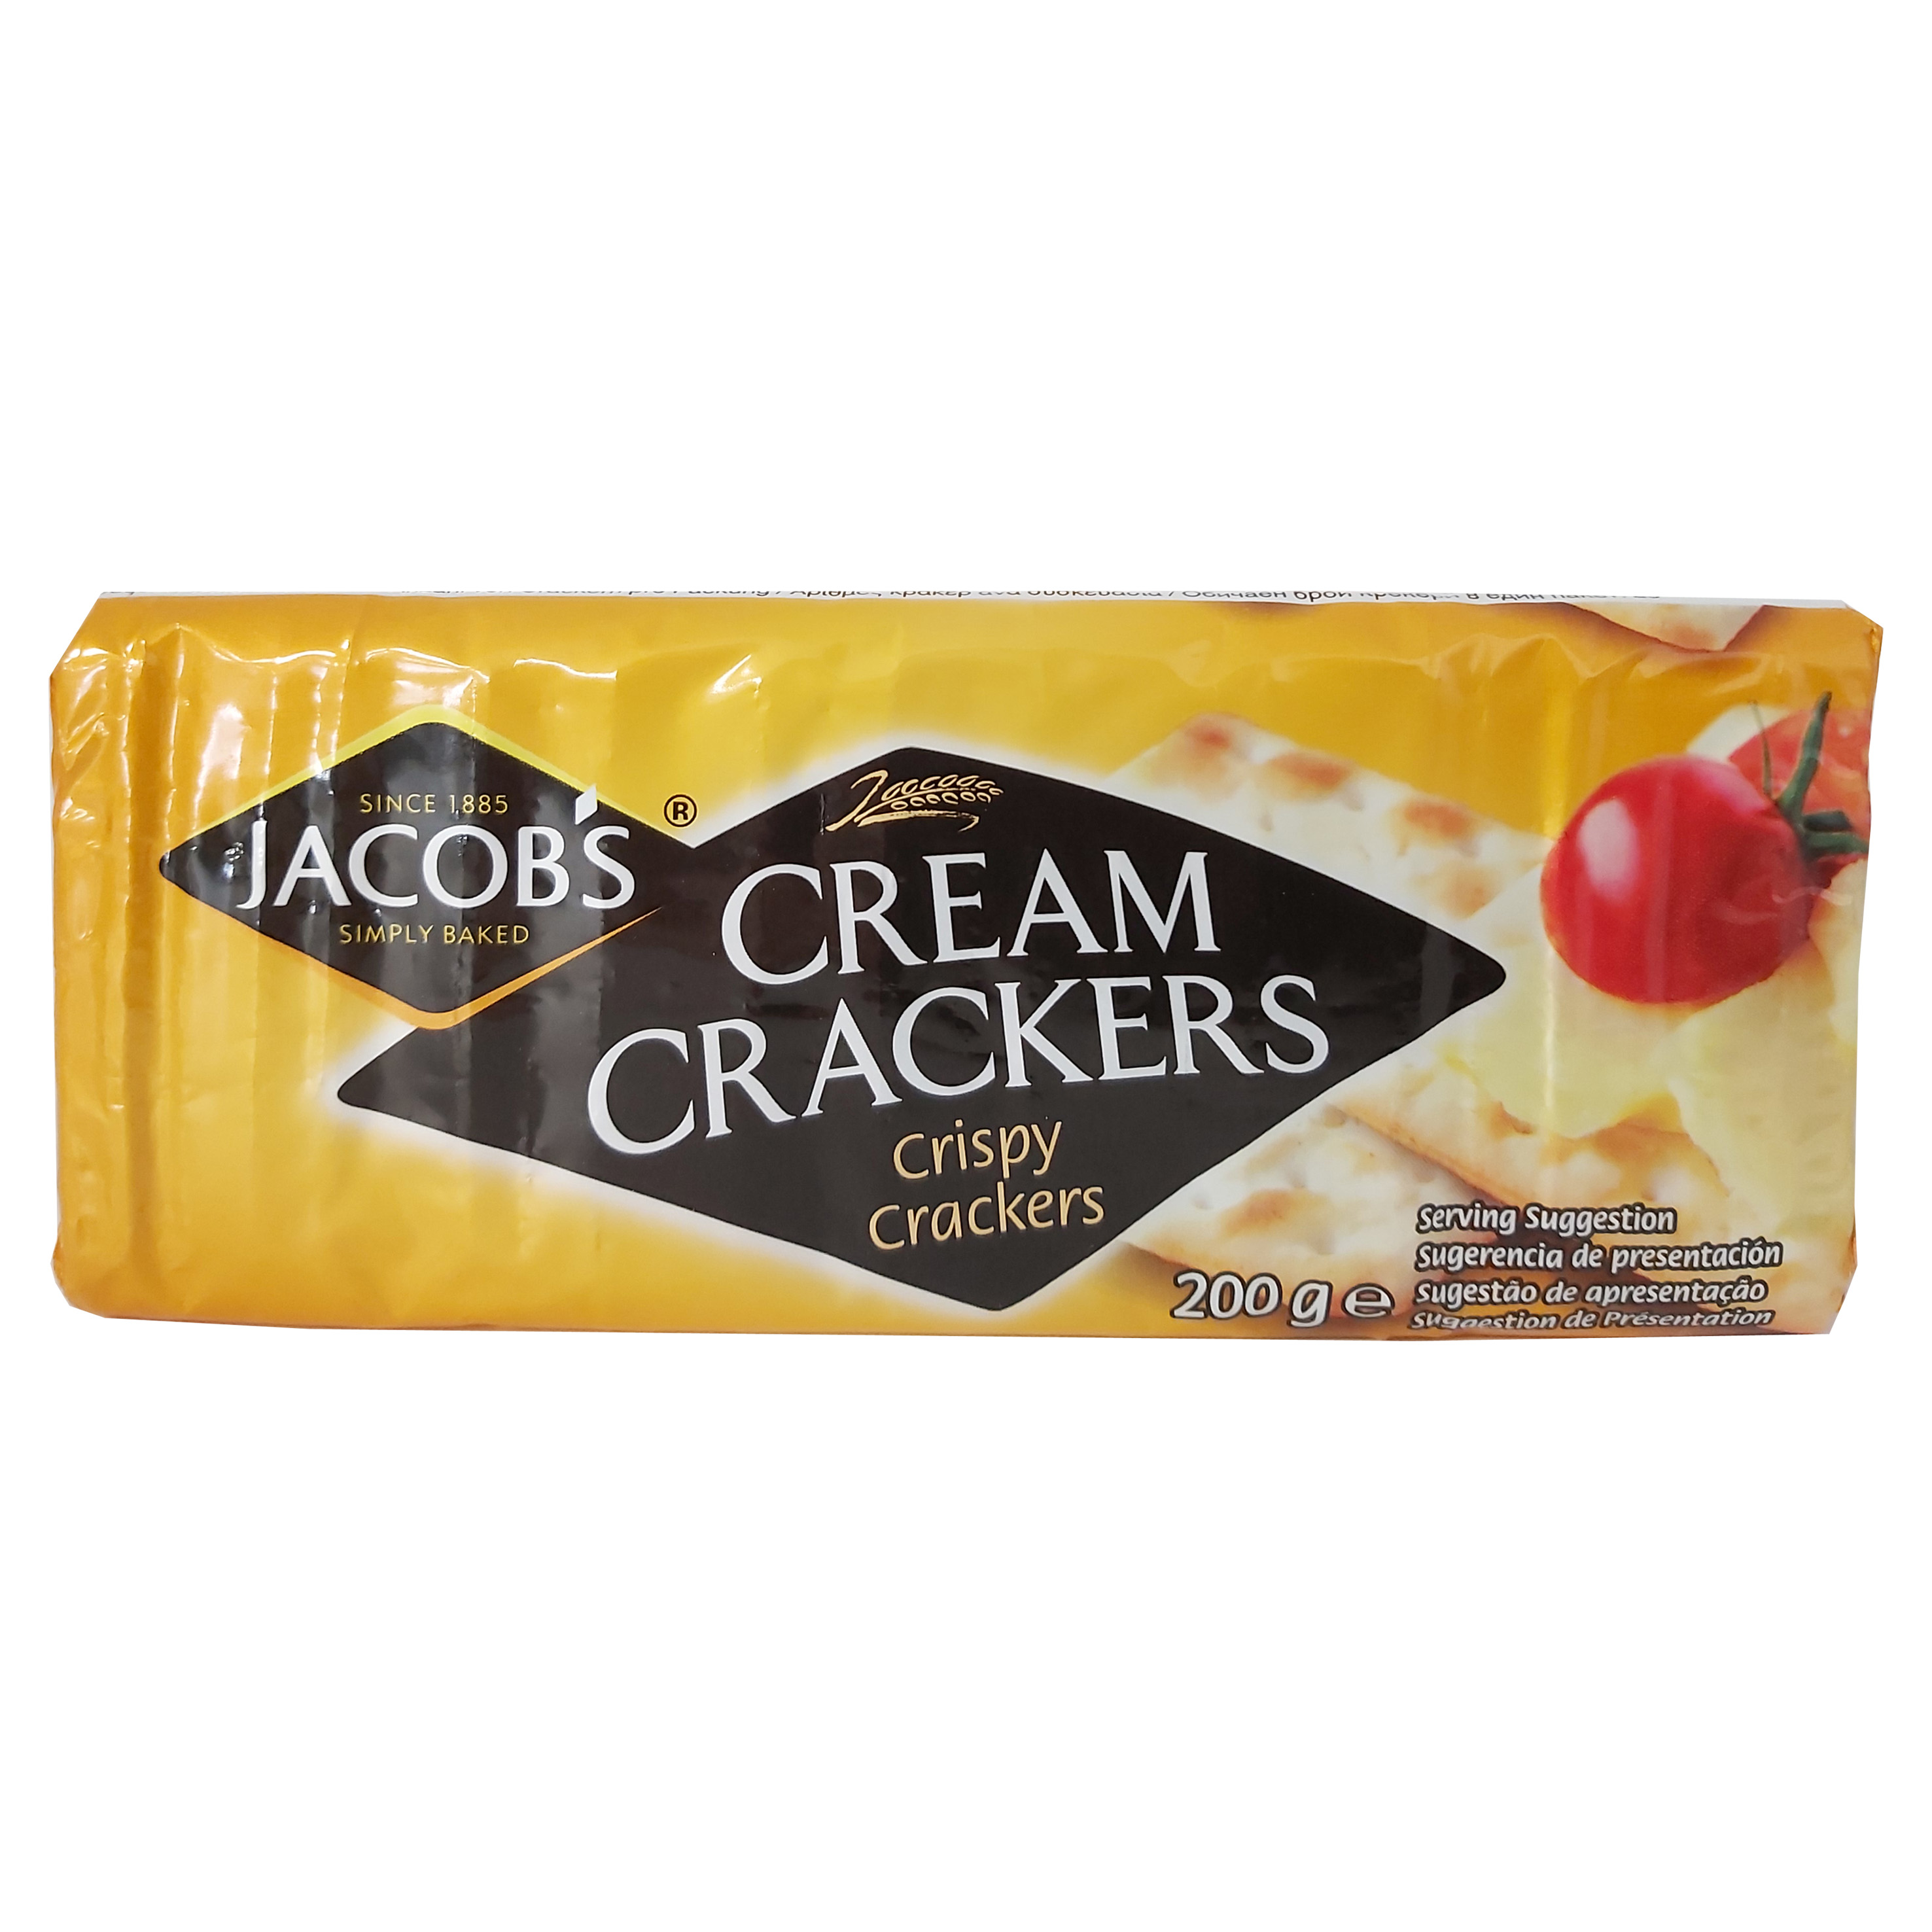 Jacobs cream crackers 200 gr.